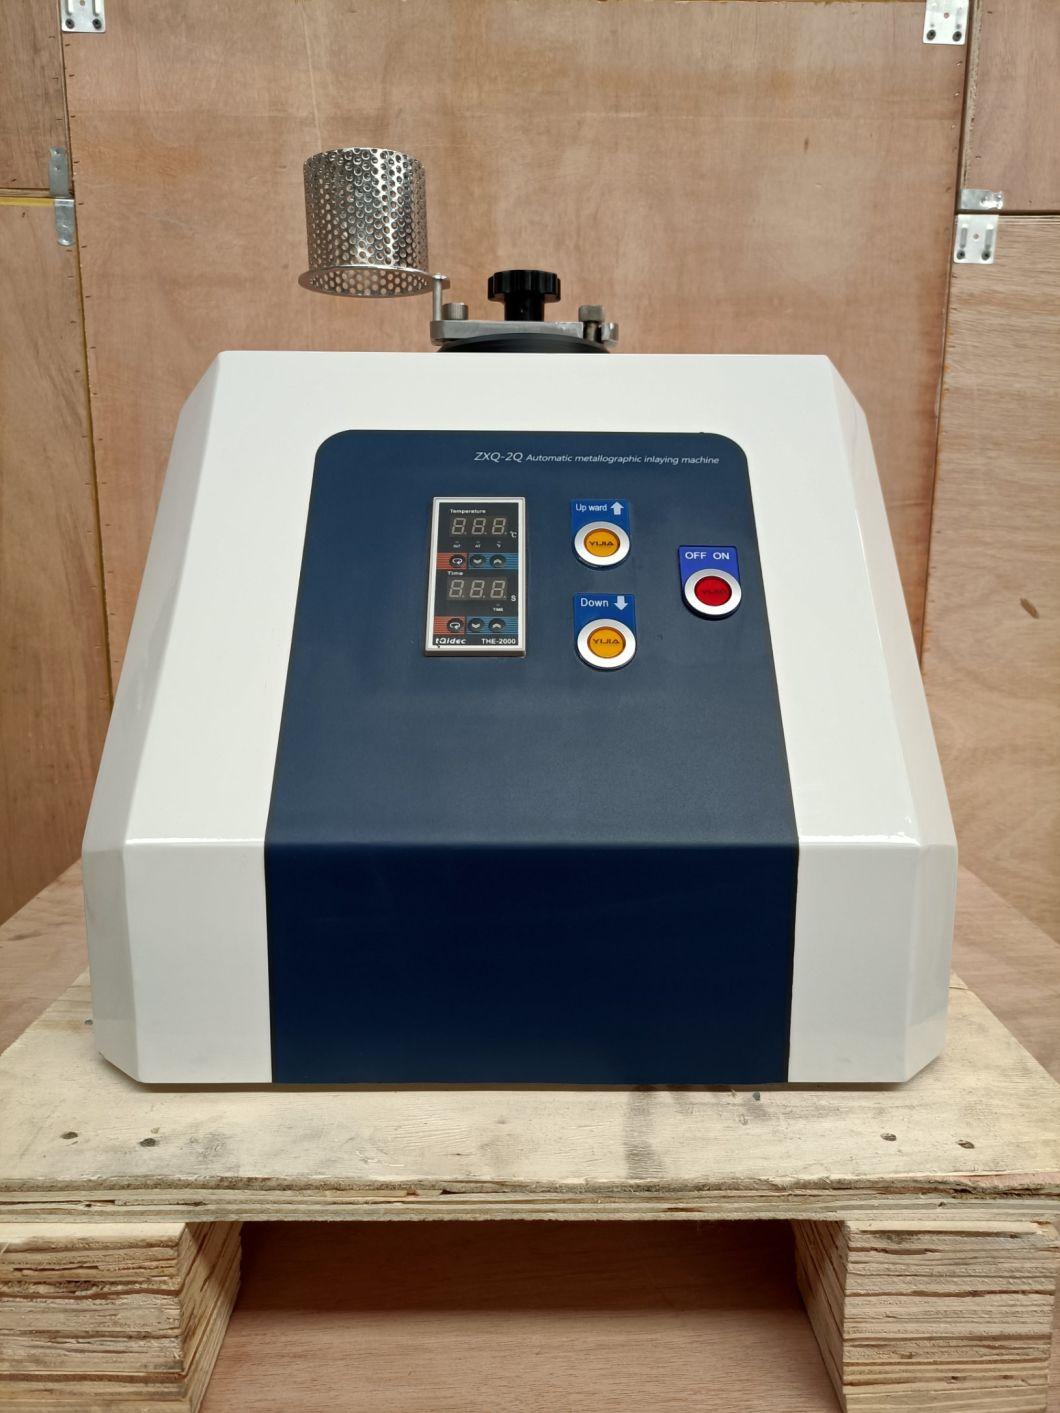 Zxq-2q Automatic Metallographic Sample Mounting Machine (pneumatic)